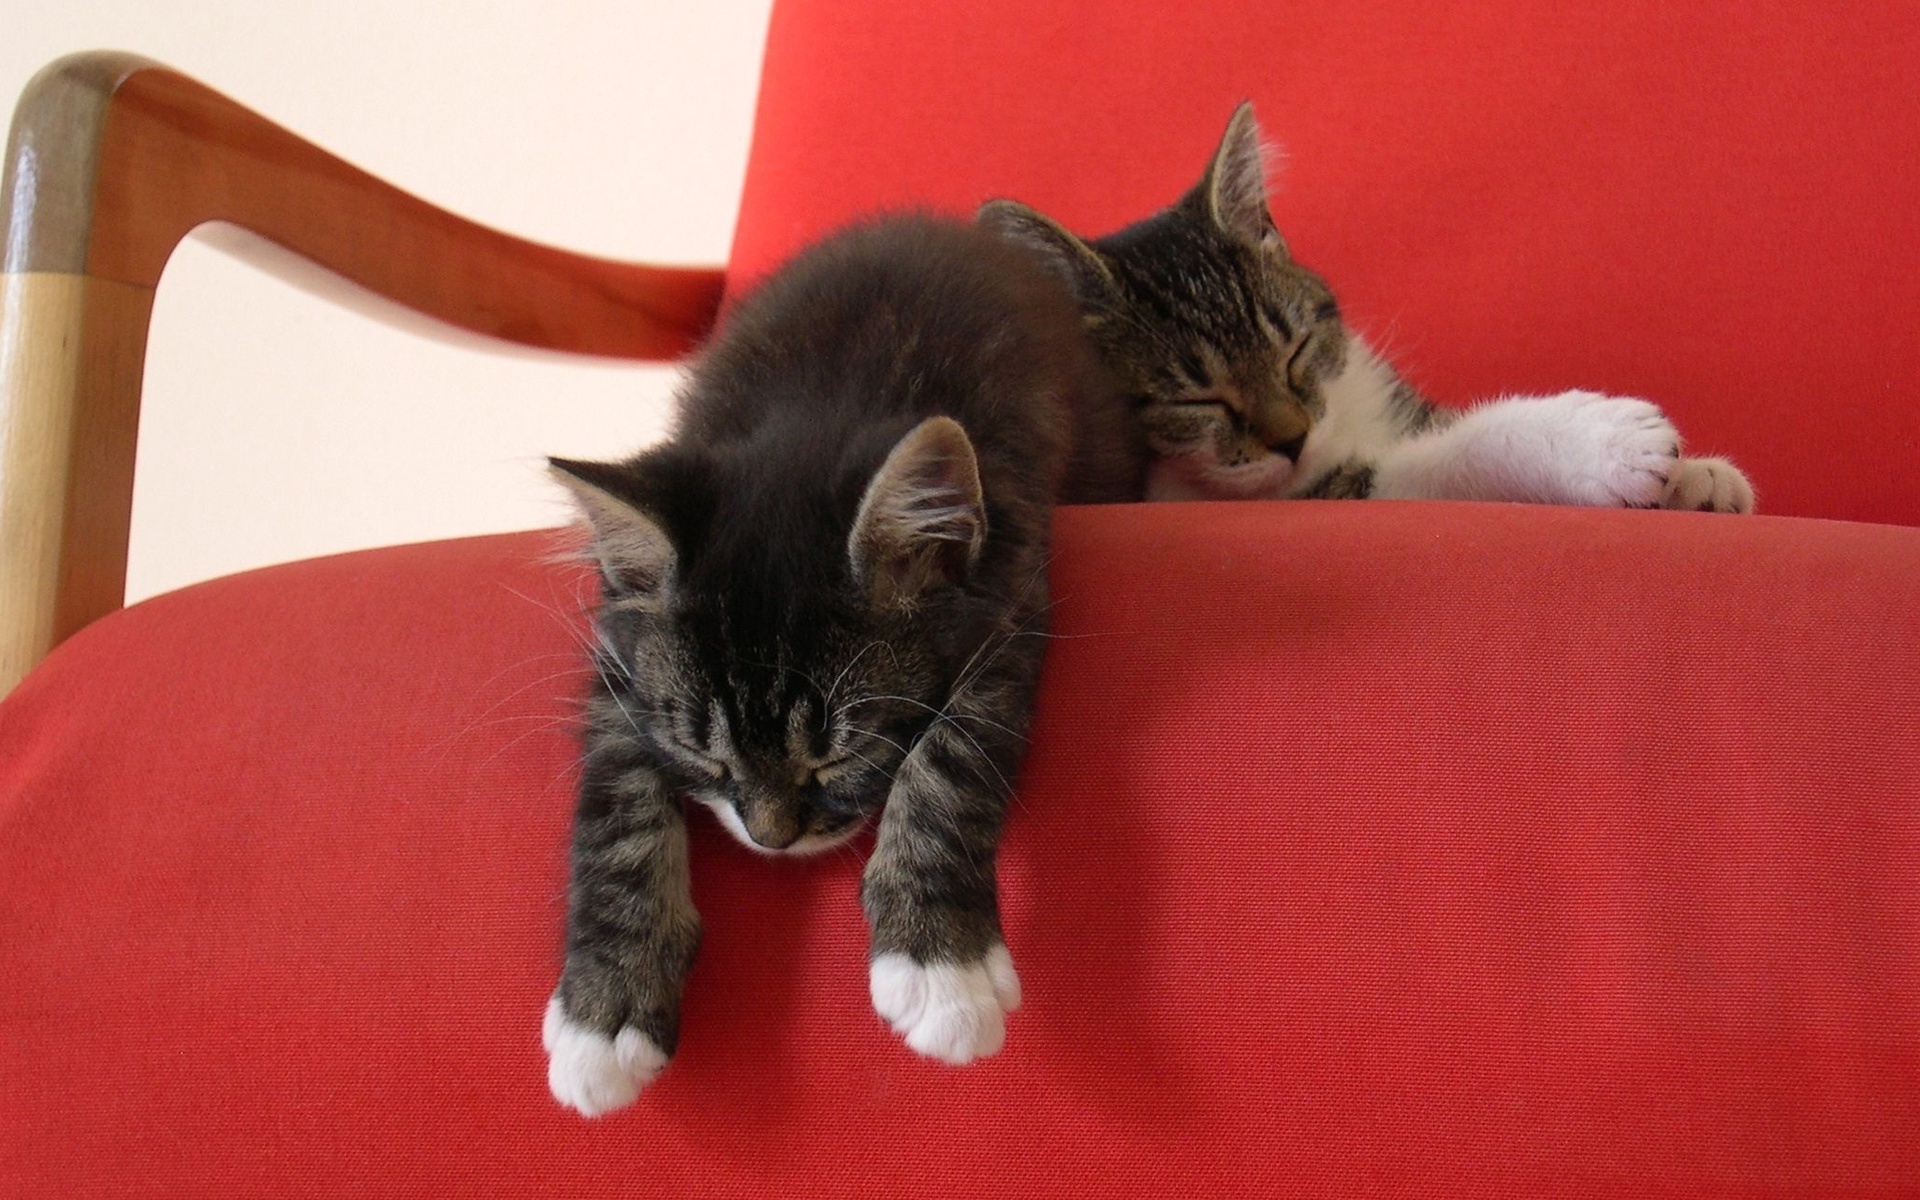 Коты на диване